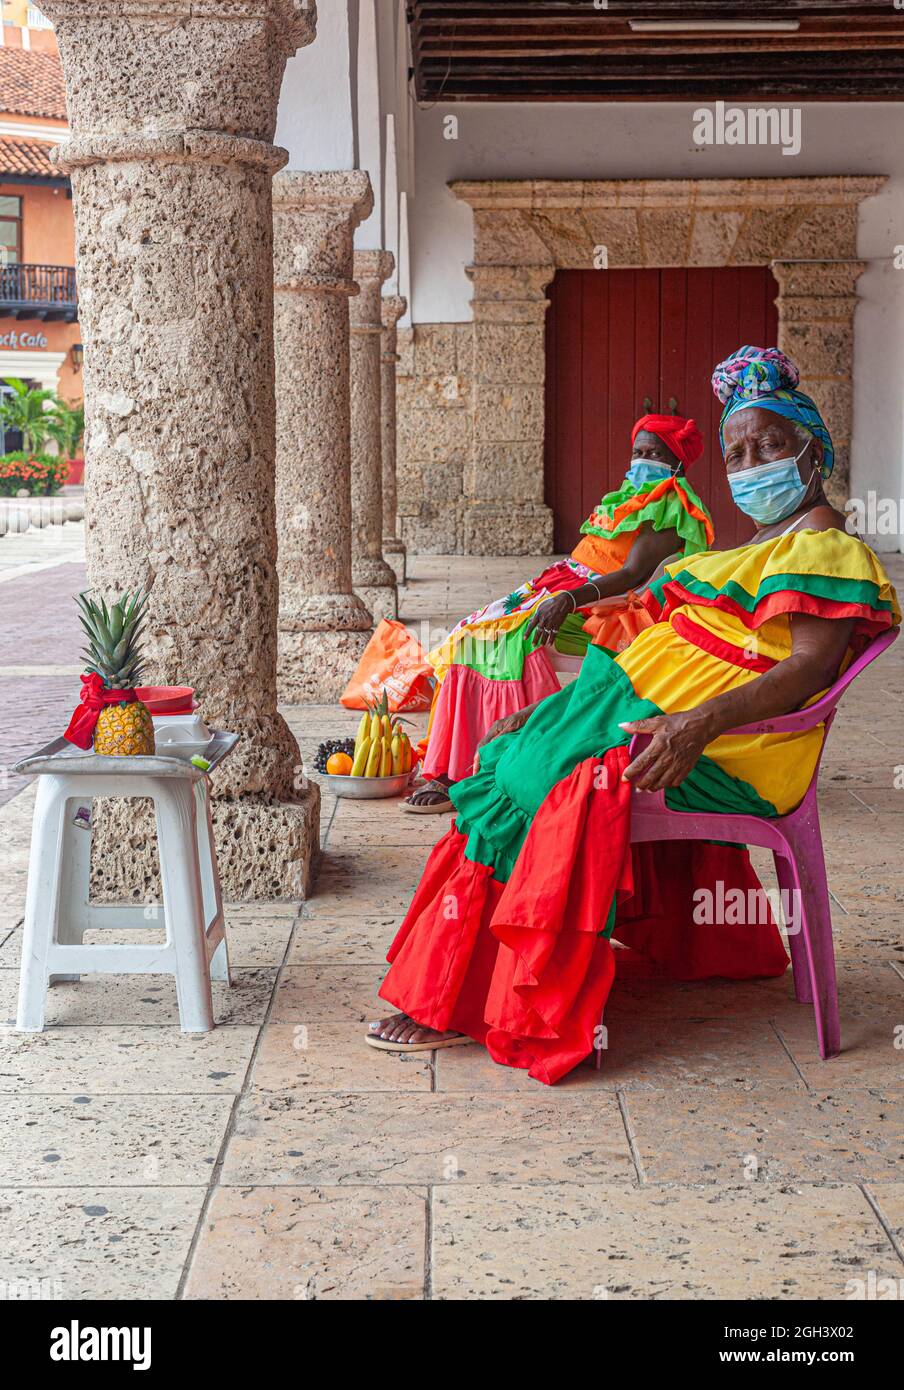 Palenqueras, traditional fruit vendors, during Covid-19 pandemic, Cartagena de Indias, Colombia. Stock Photo